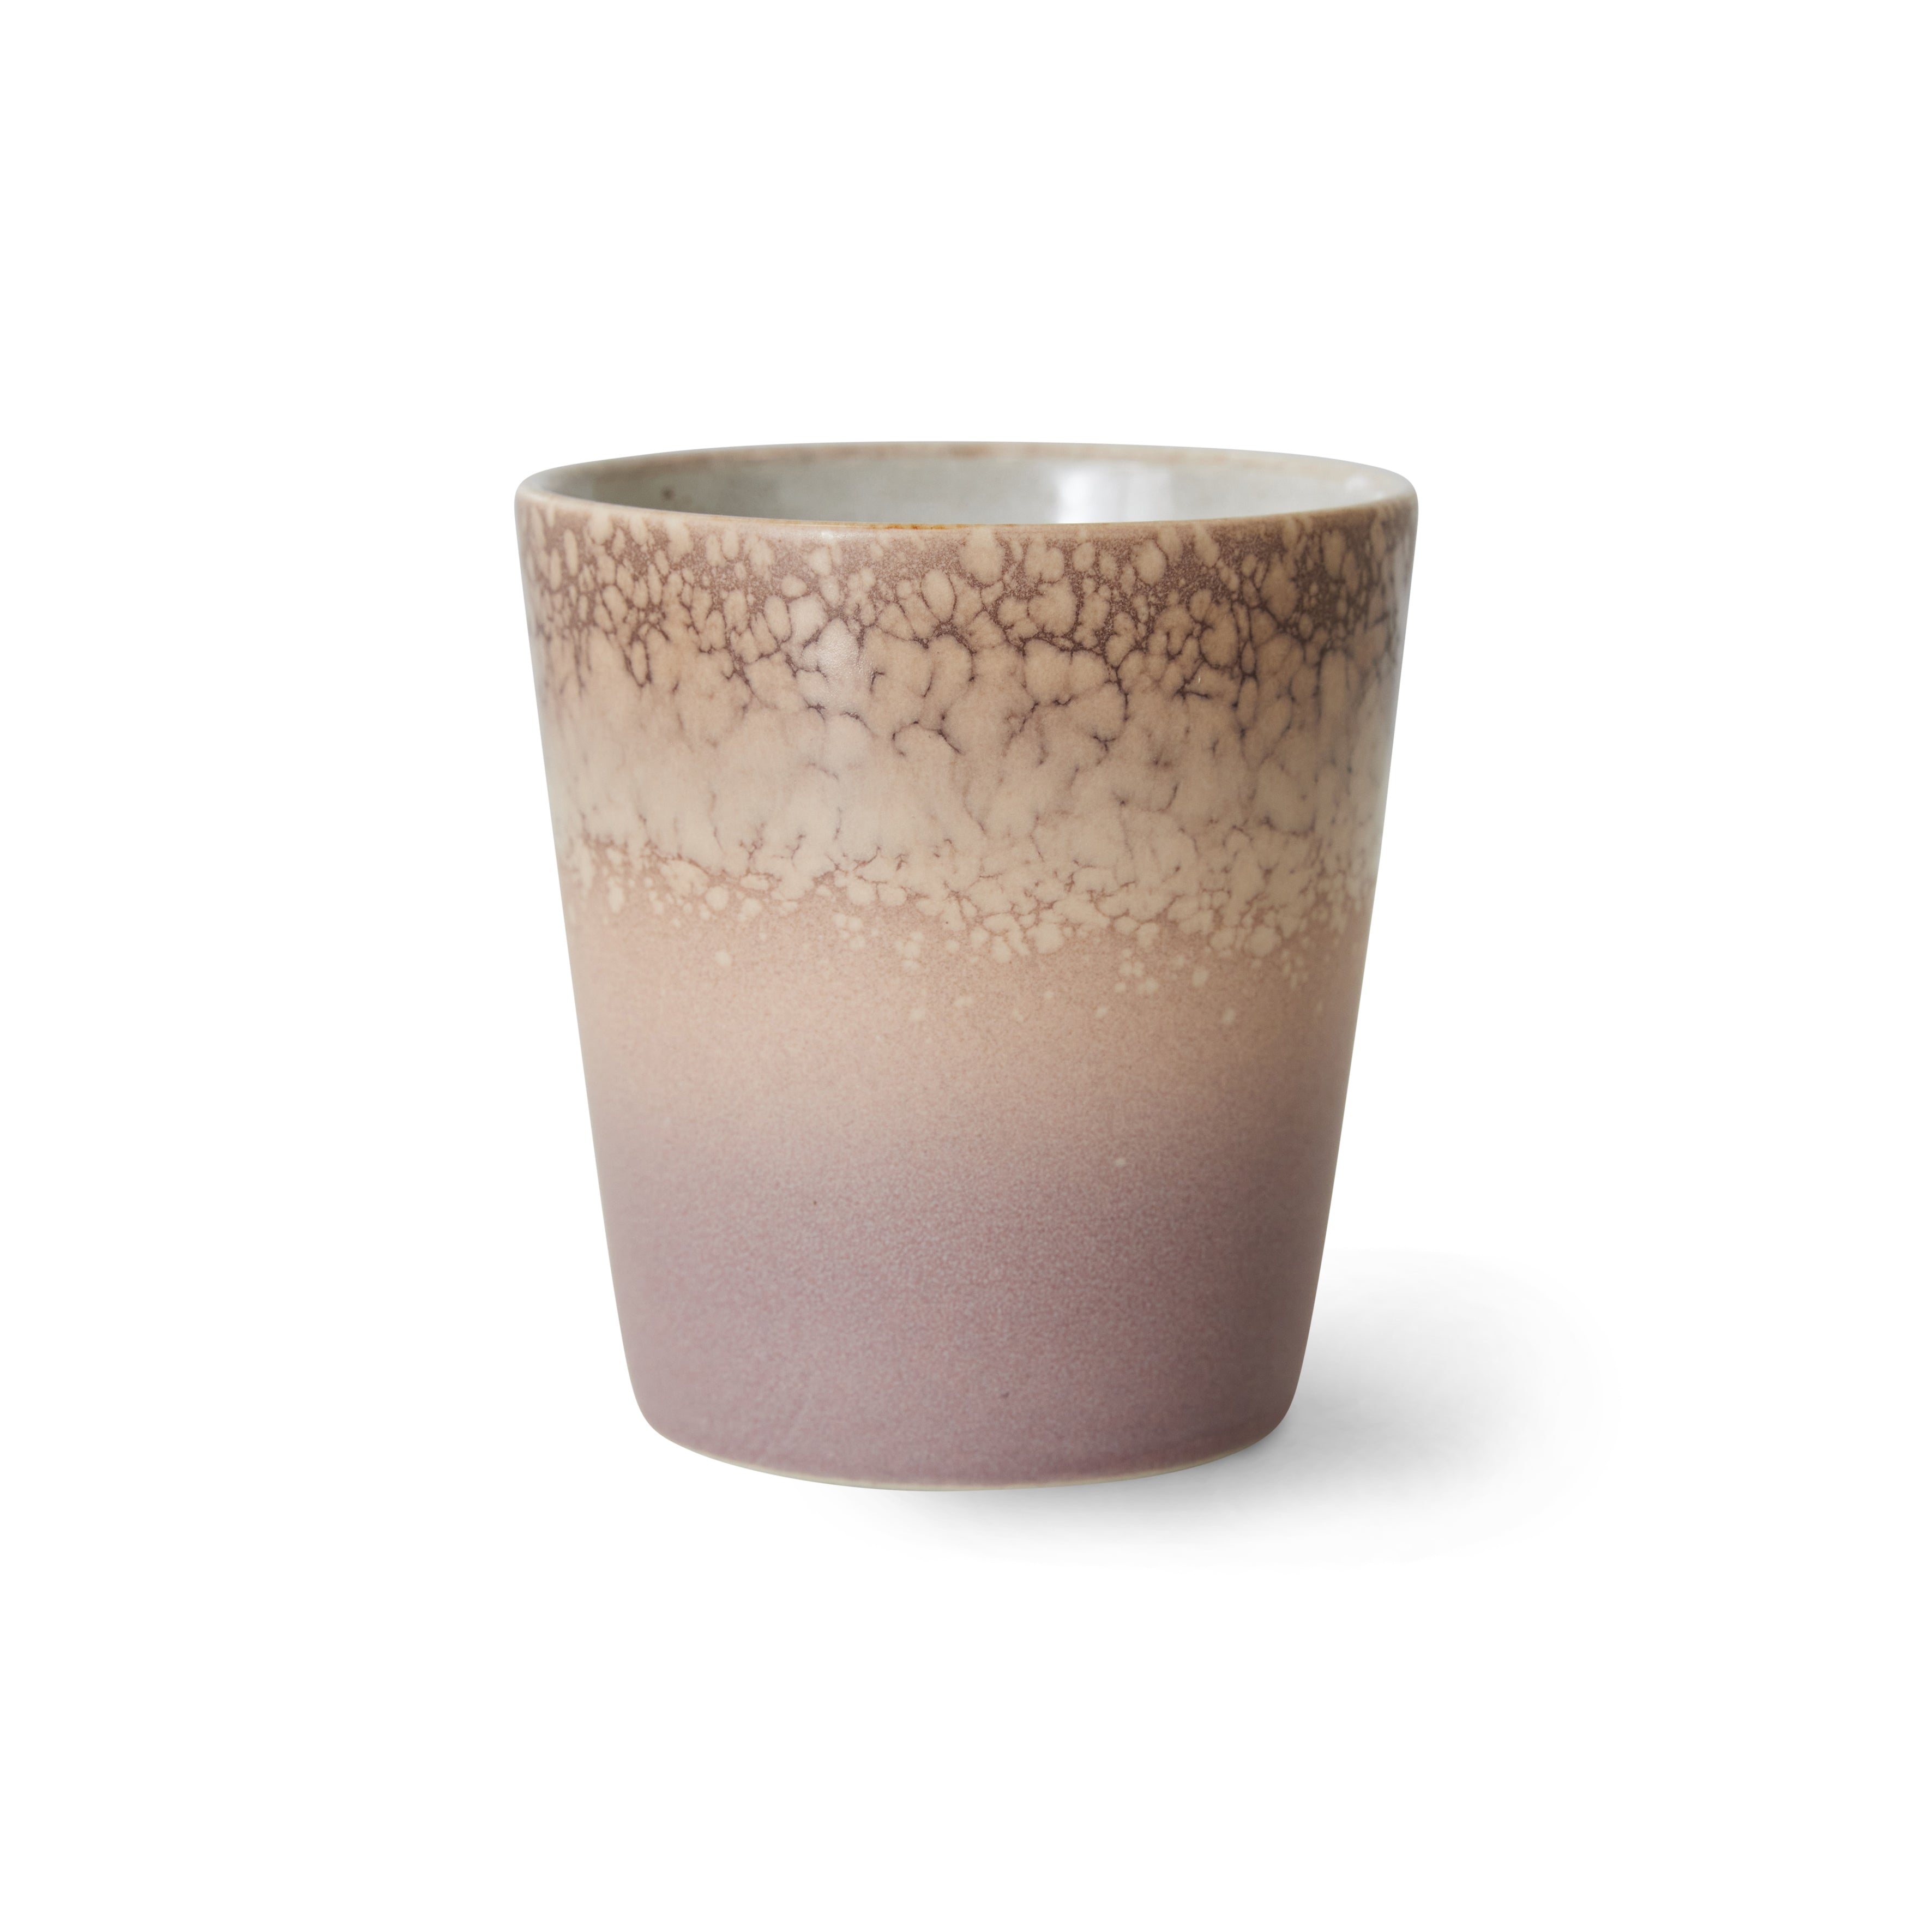 70s ceramics: coffee mug, force